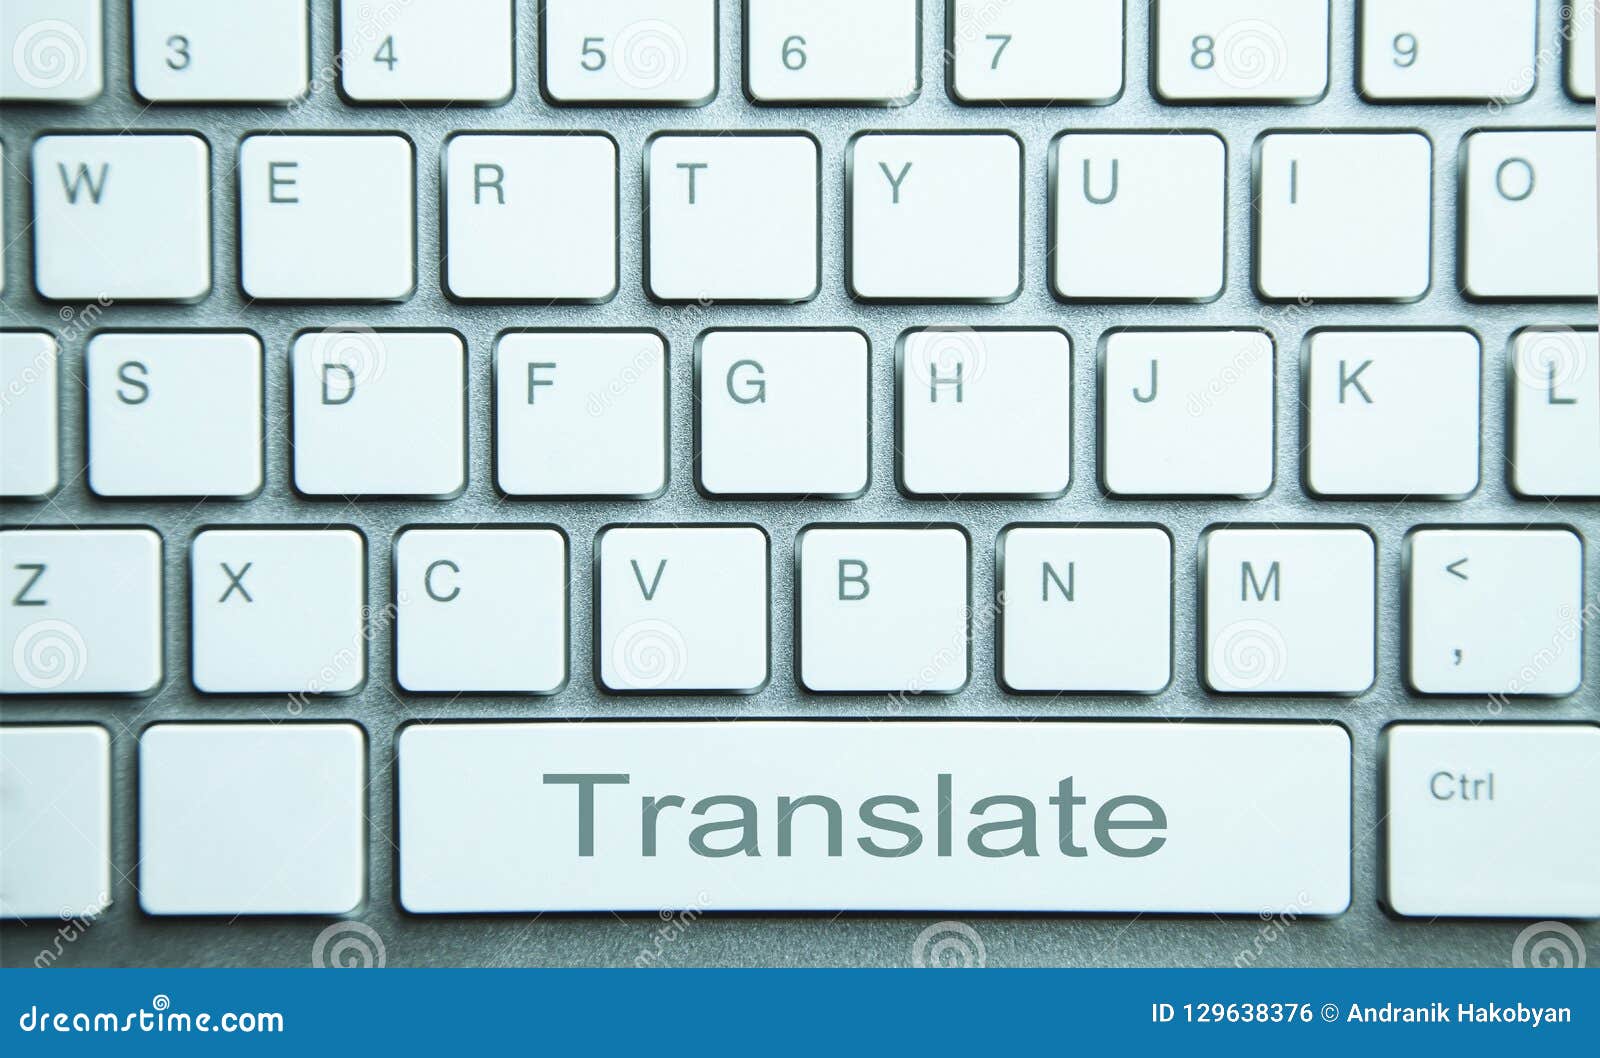 translate button on computer keyboard. online translation service